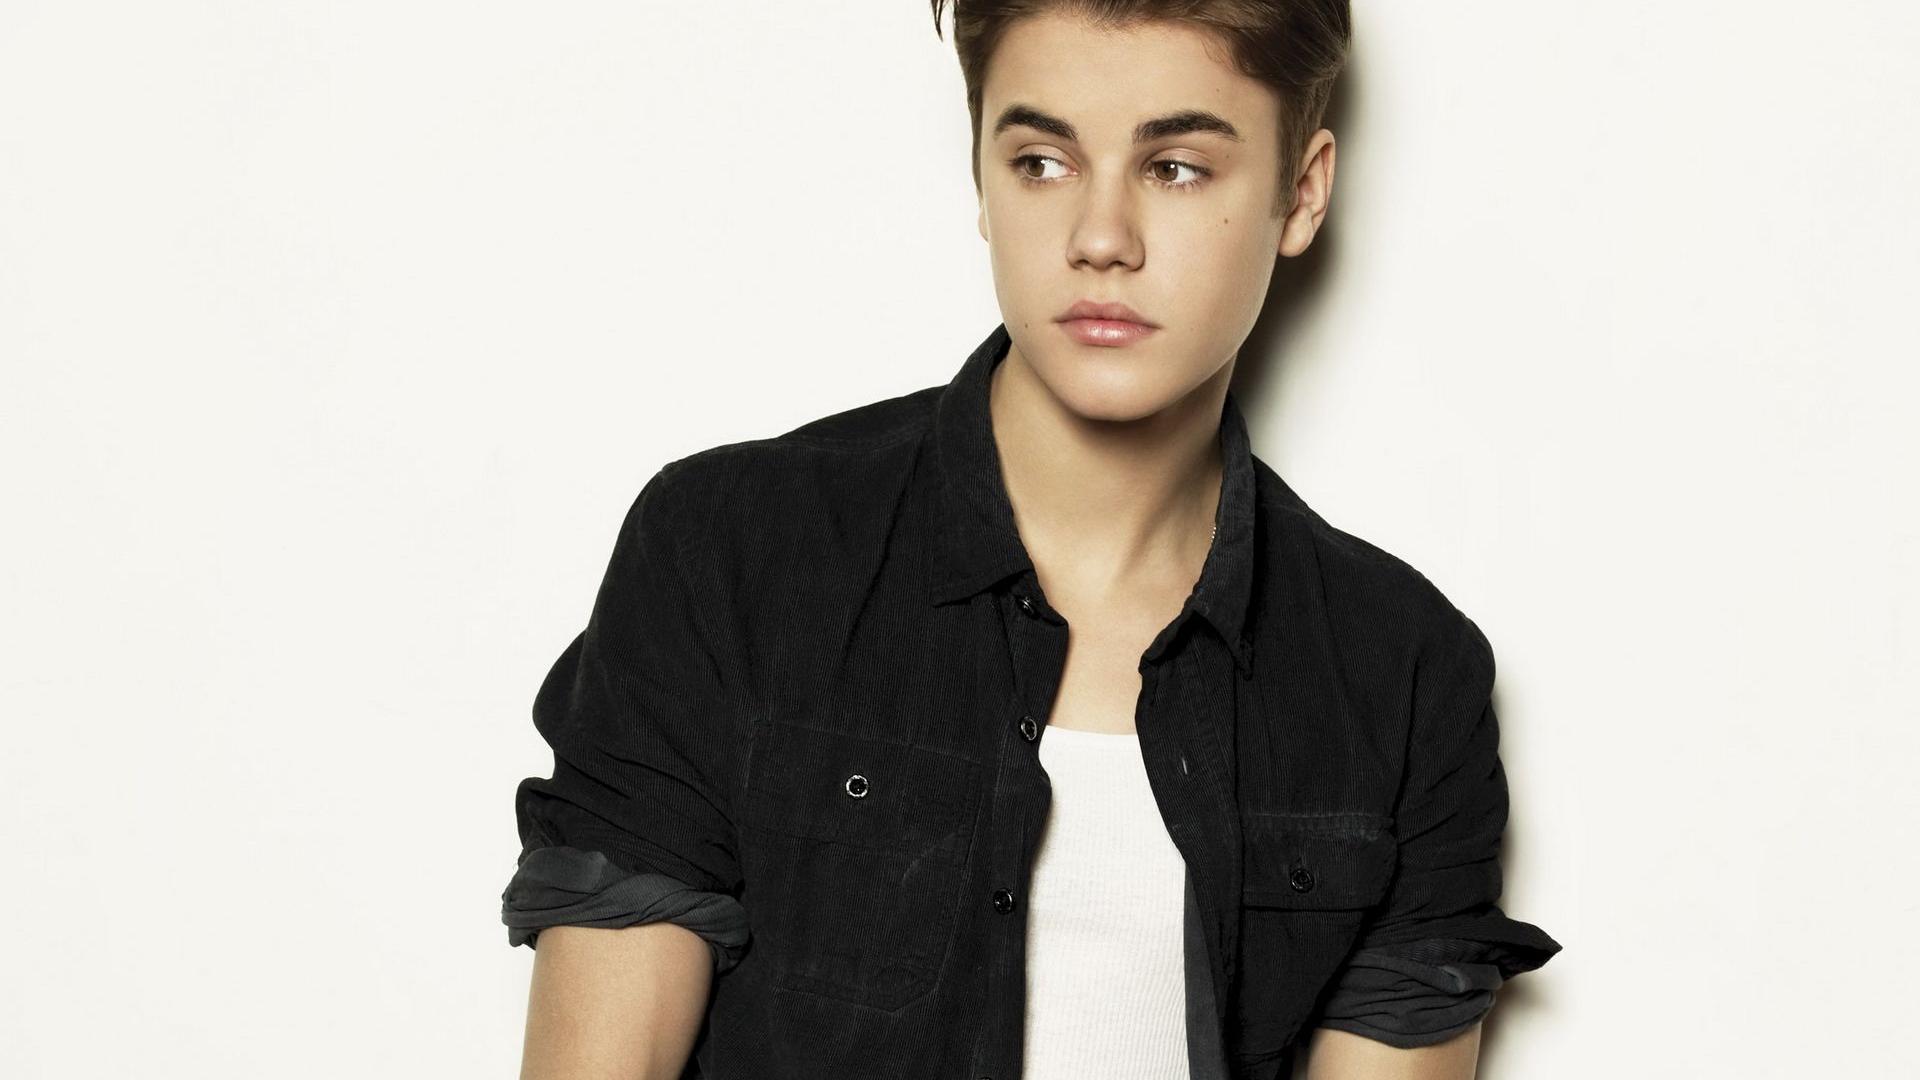 Justin Bieber Wallpaper Image